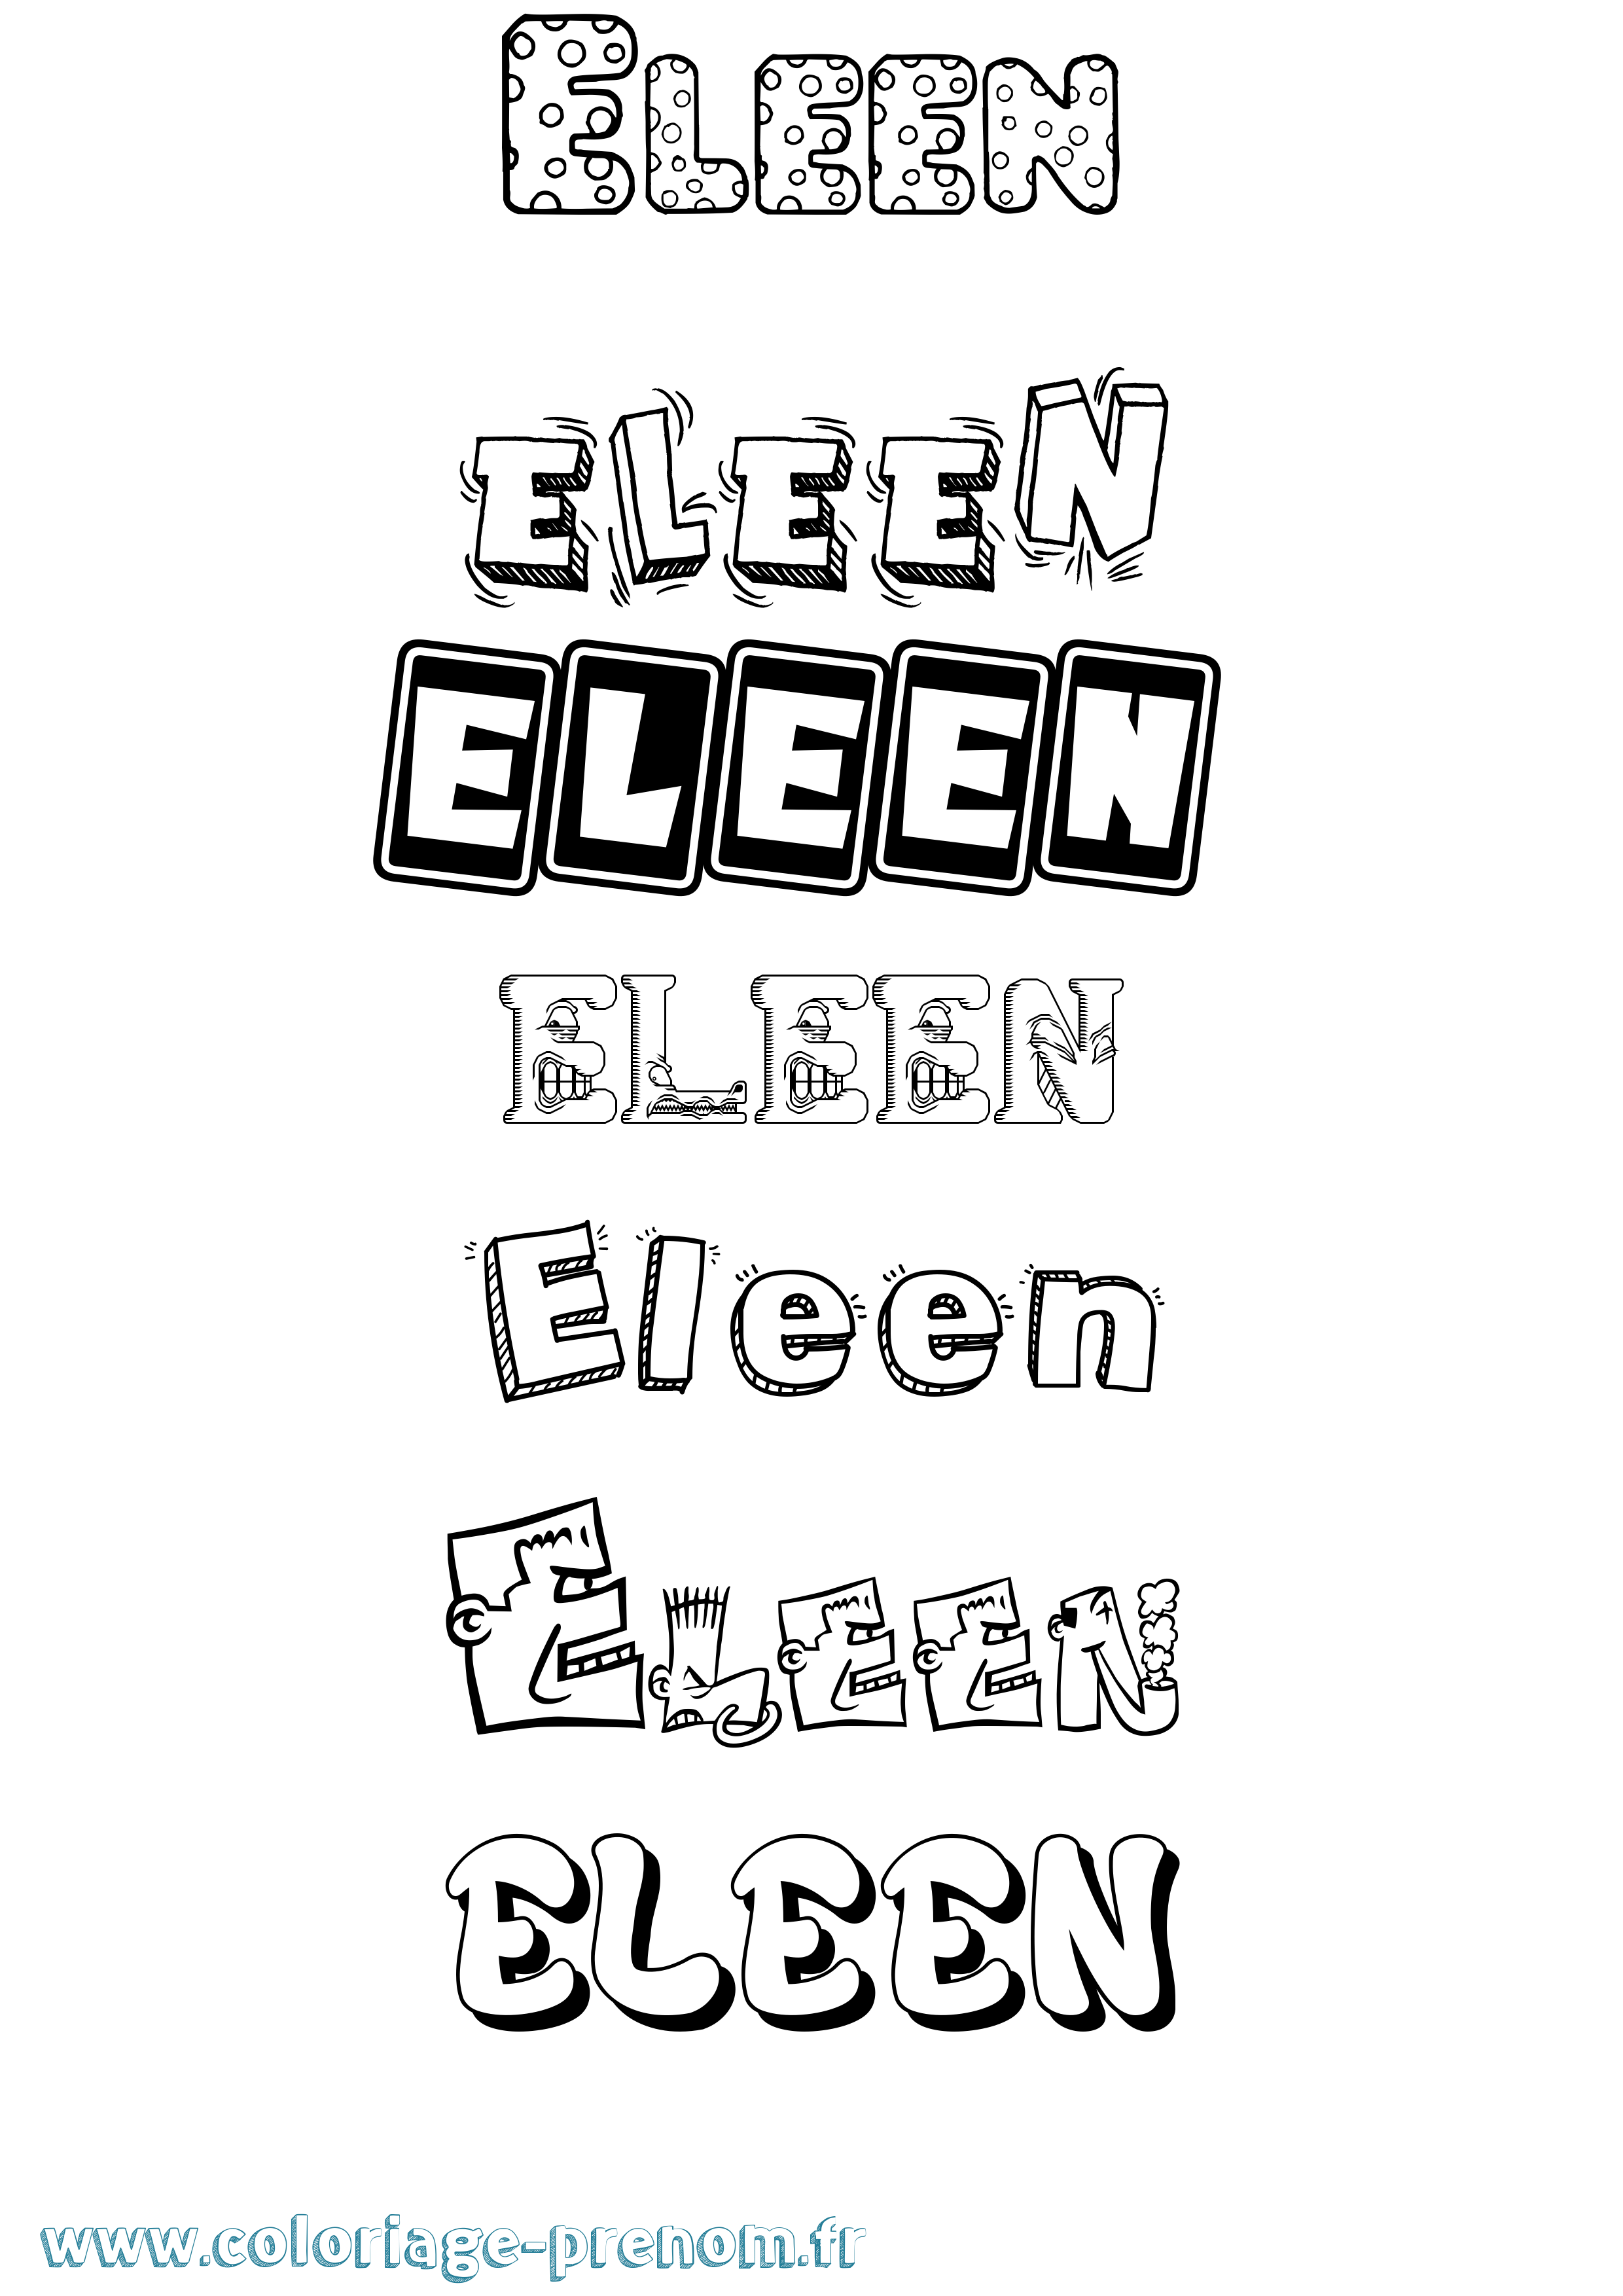 Coloriage prénom Eleen Fun